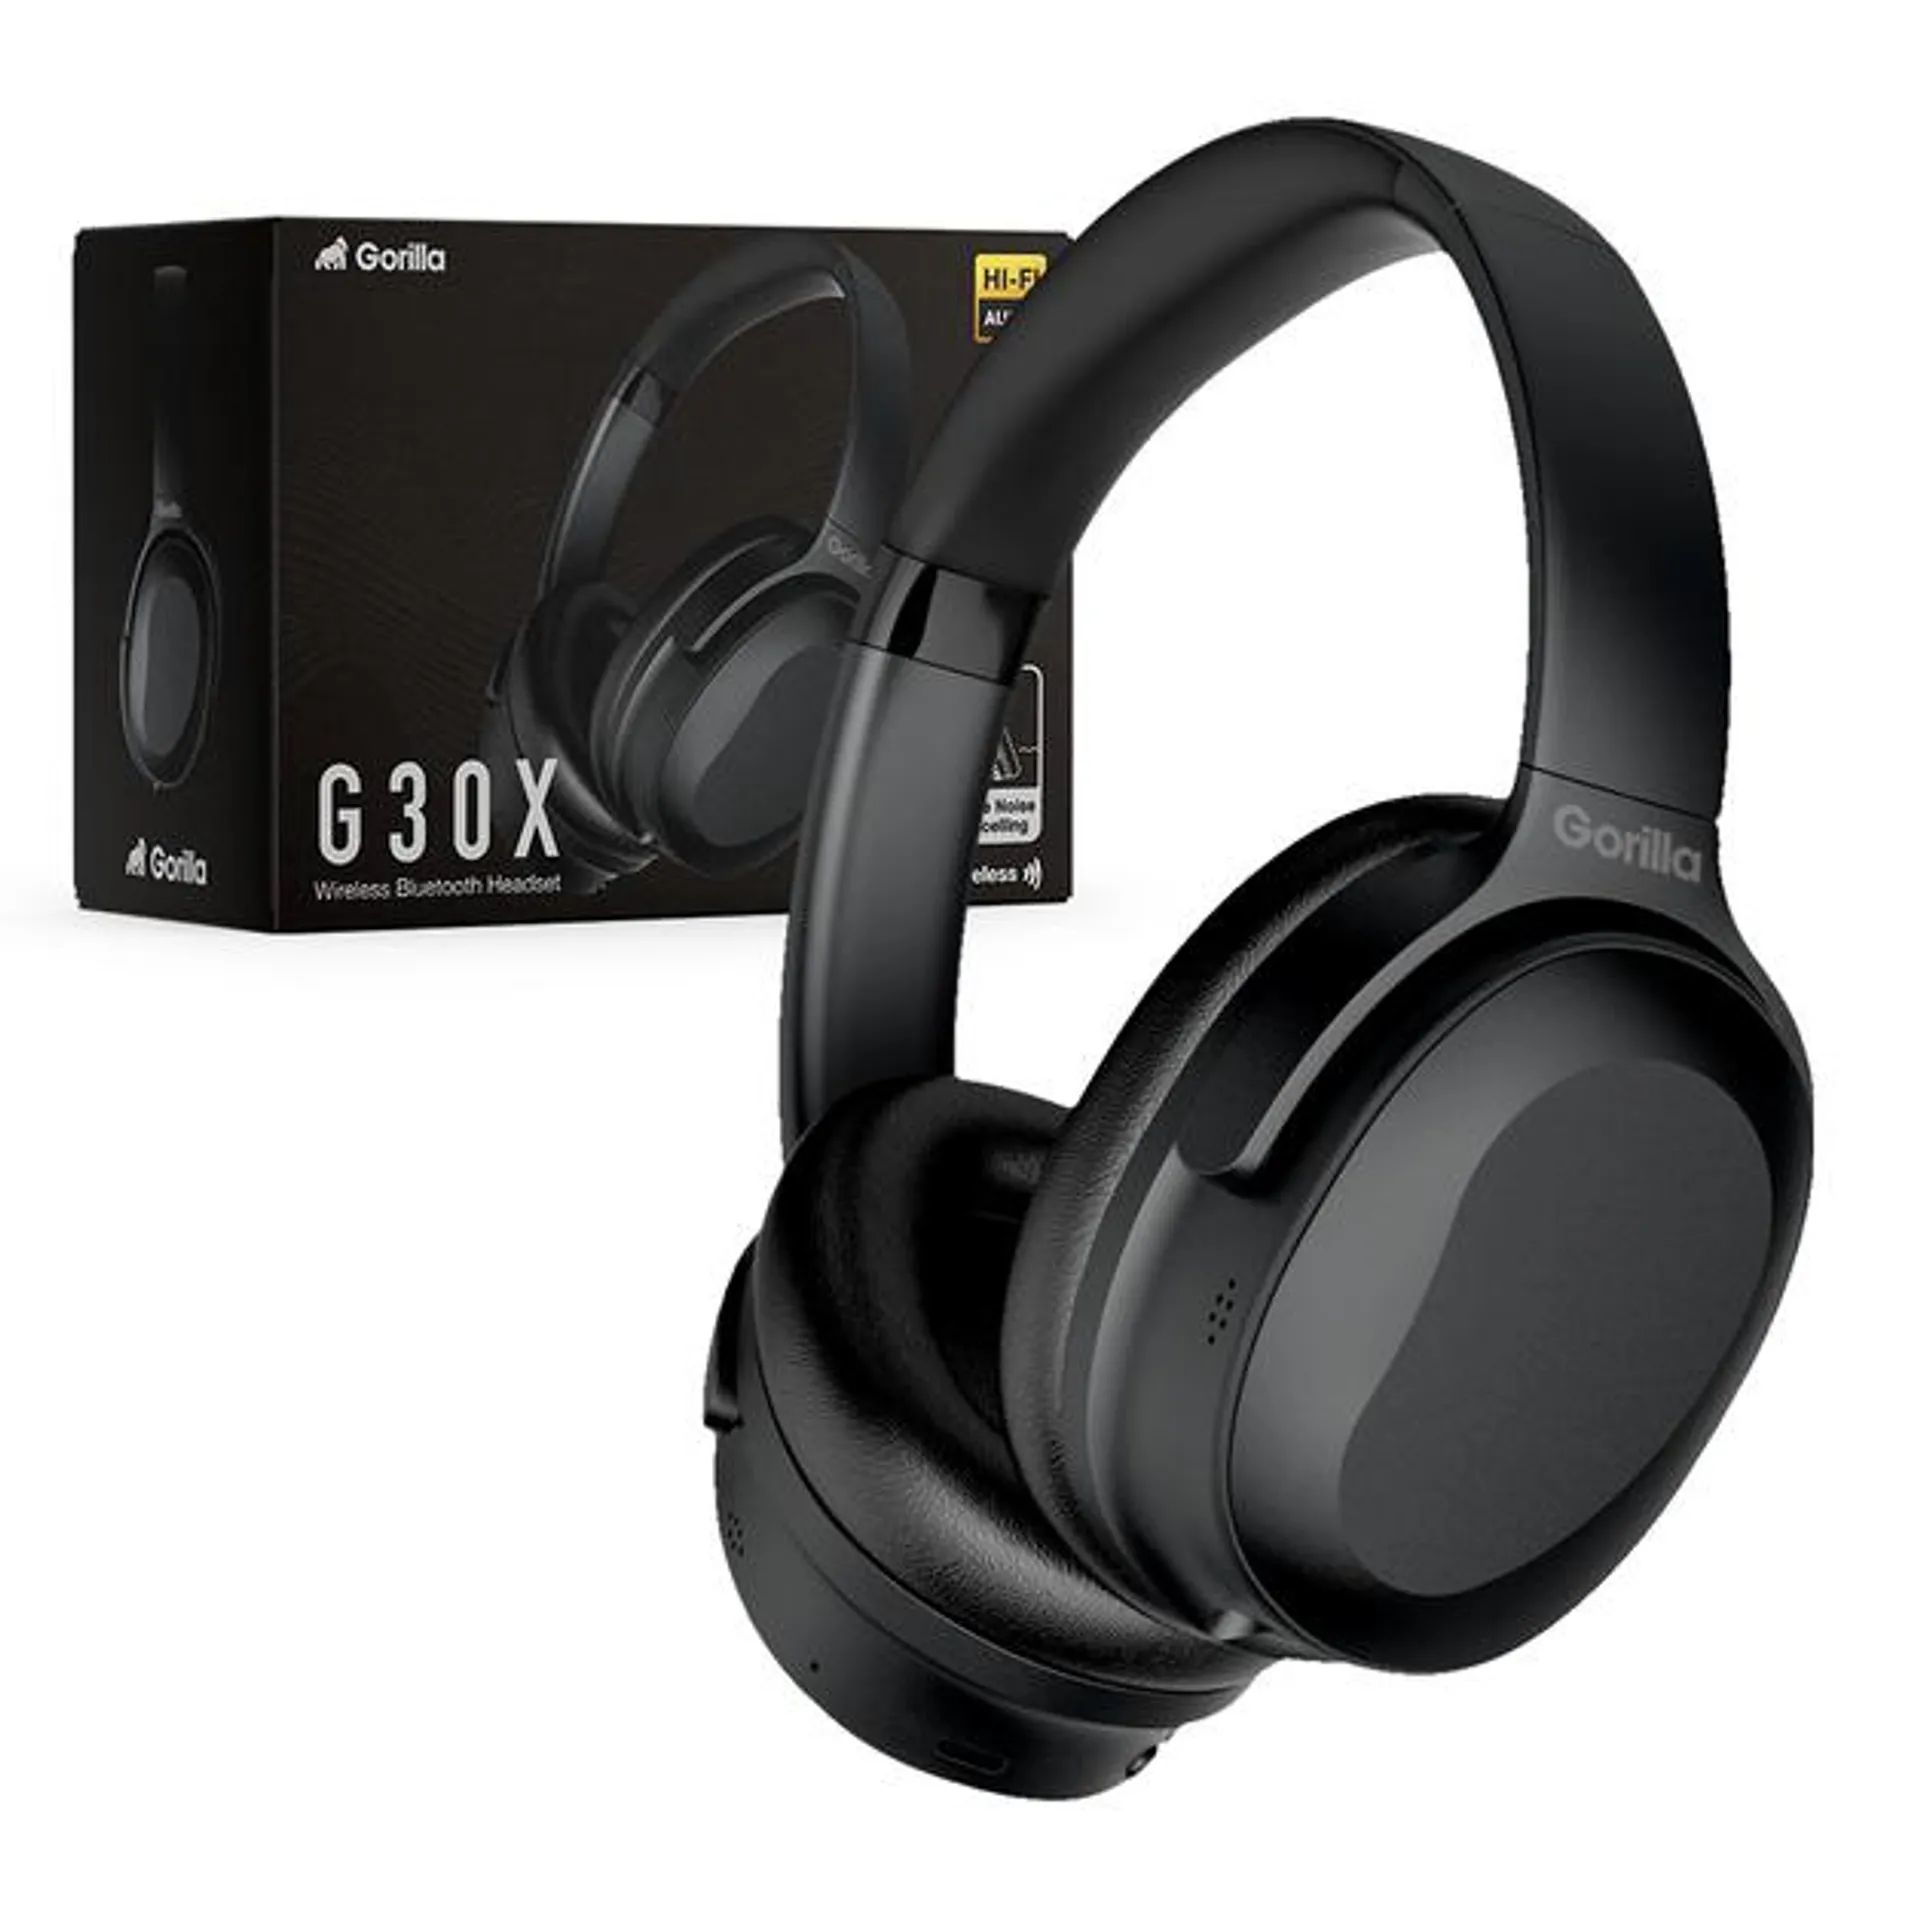 Gorilla G30X Active Noise Canceling Wireless Headphones